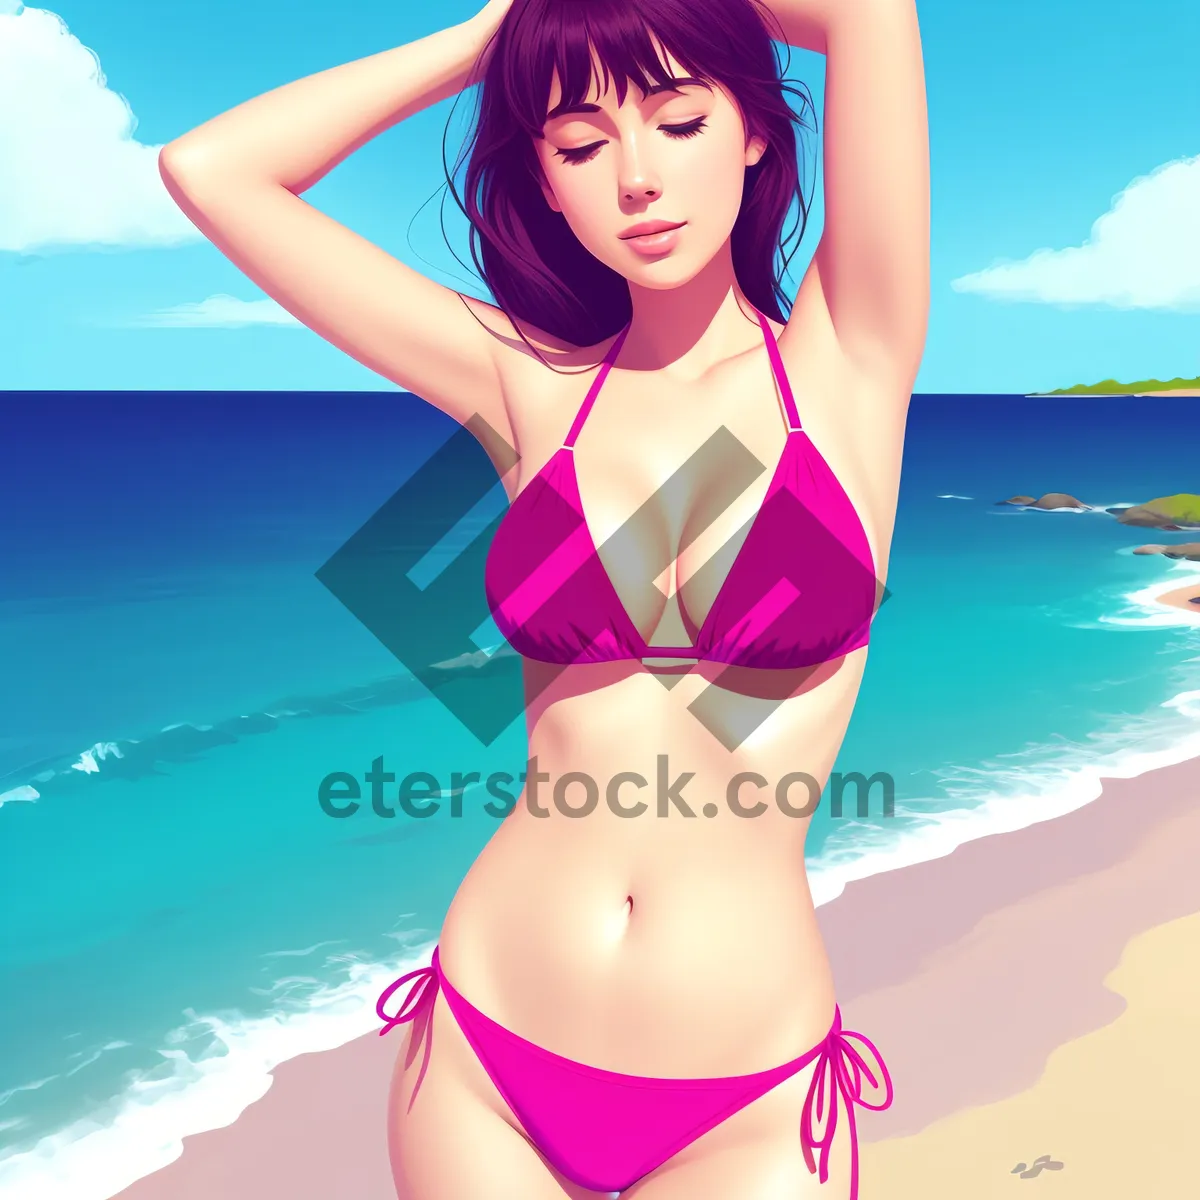 Picture of Beach Babe in Stylish Bikini: Perfect Summer Getaway Look